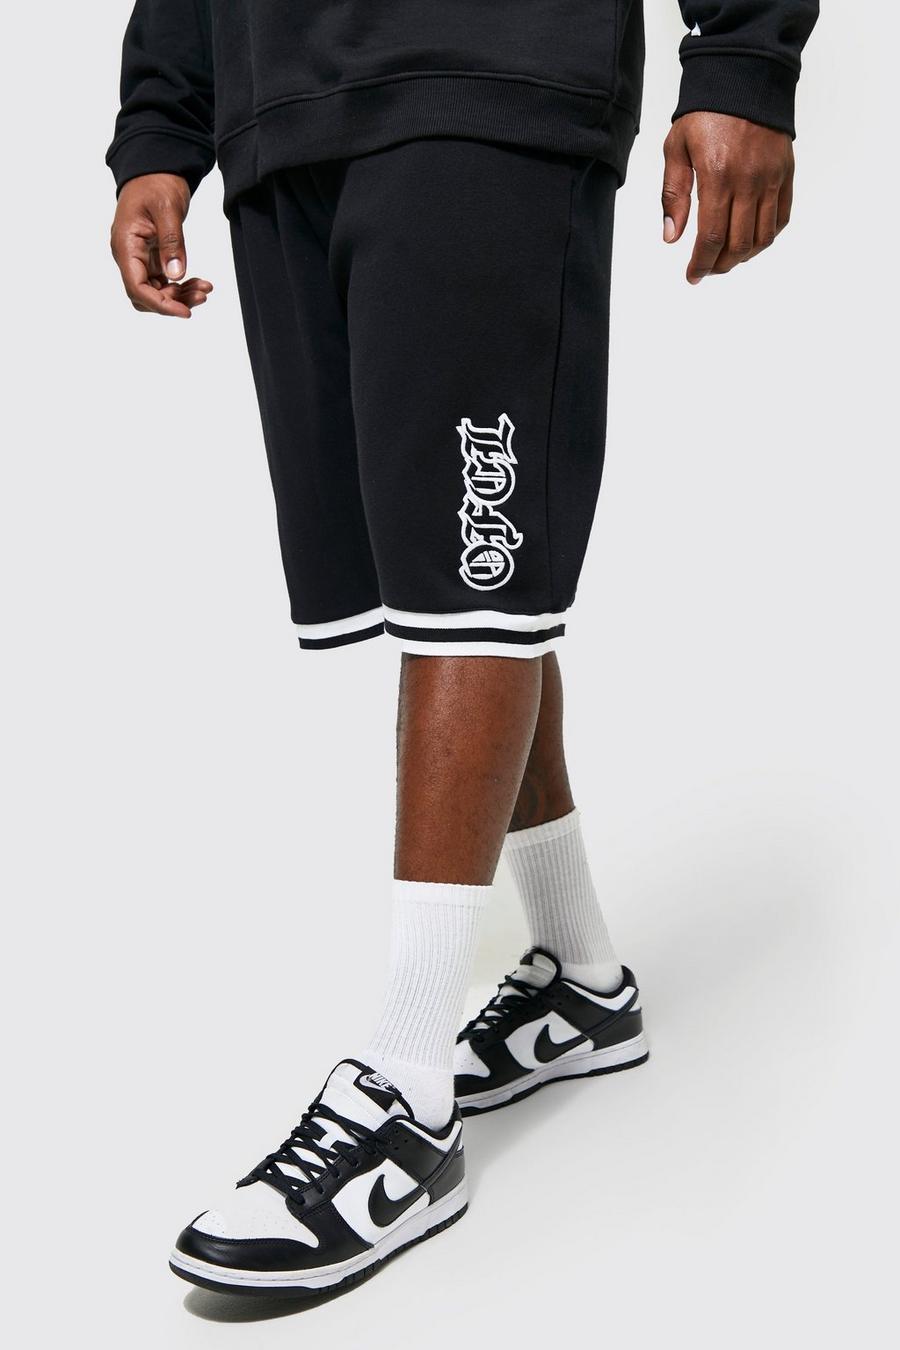 Pantalón corto Plus Ofcl estilo baloncesto con aplique universitario, Black image number 1